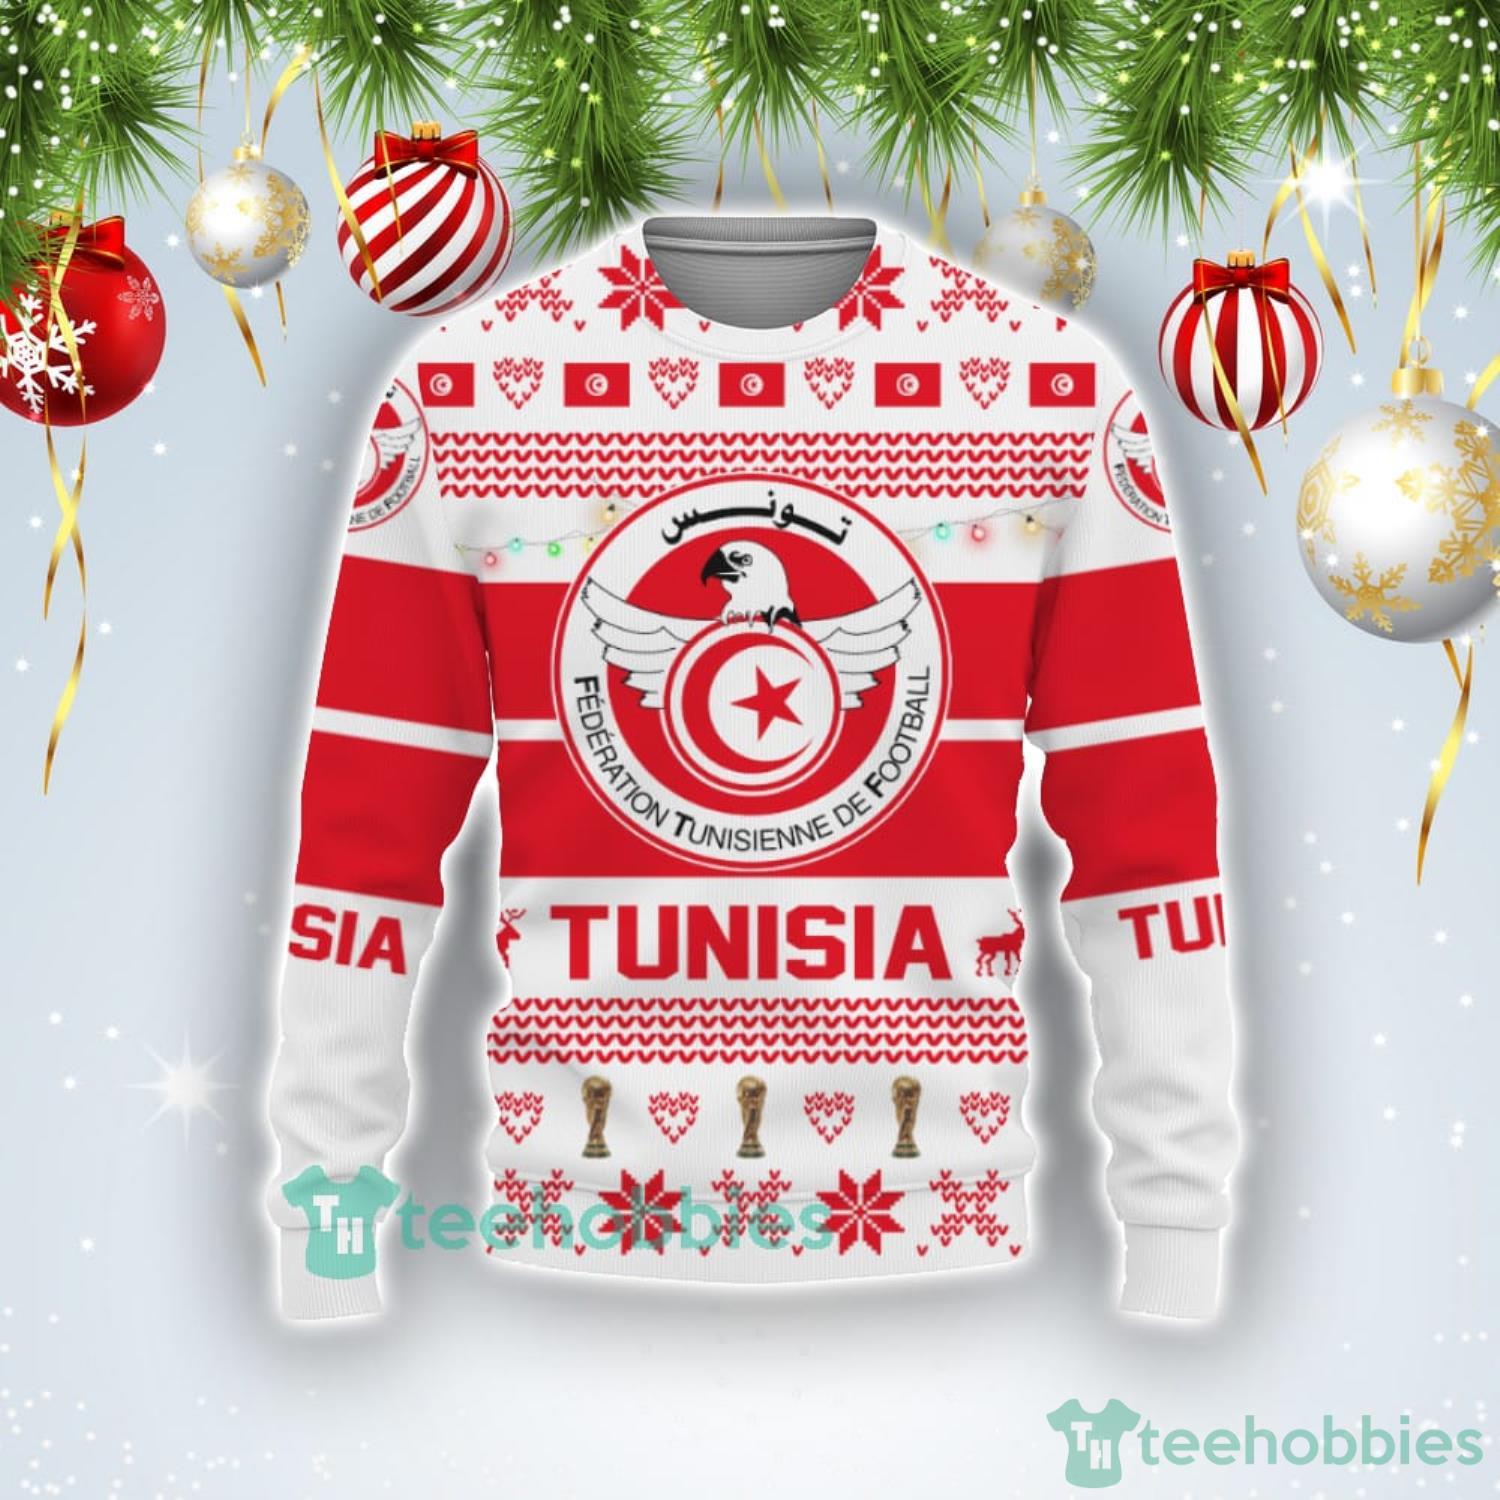 Tunisia National Team Qatar World Cup 2022 Merry Christmas Ugly Christmas Sweater Product Photo 1